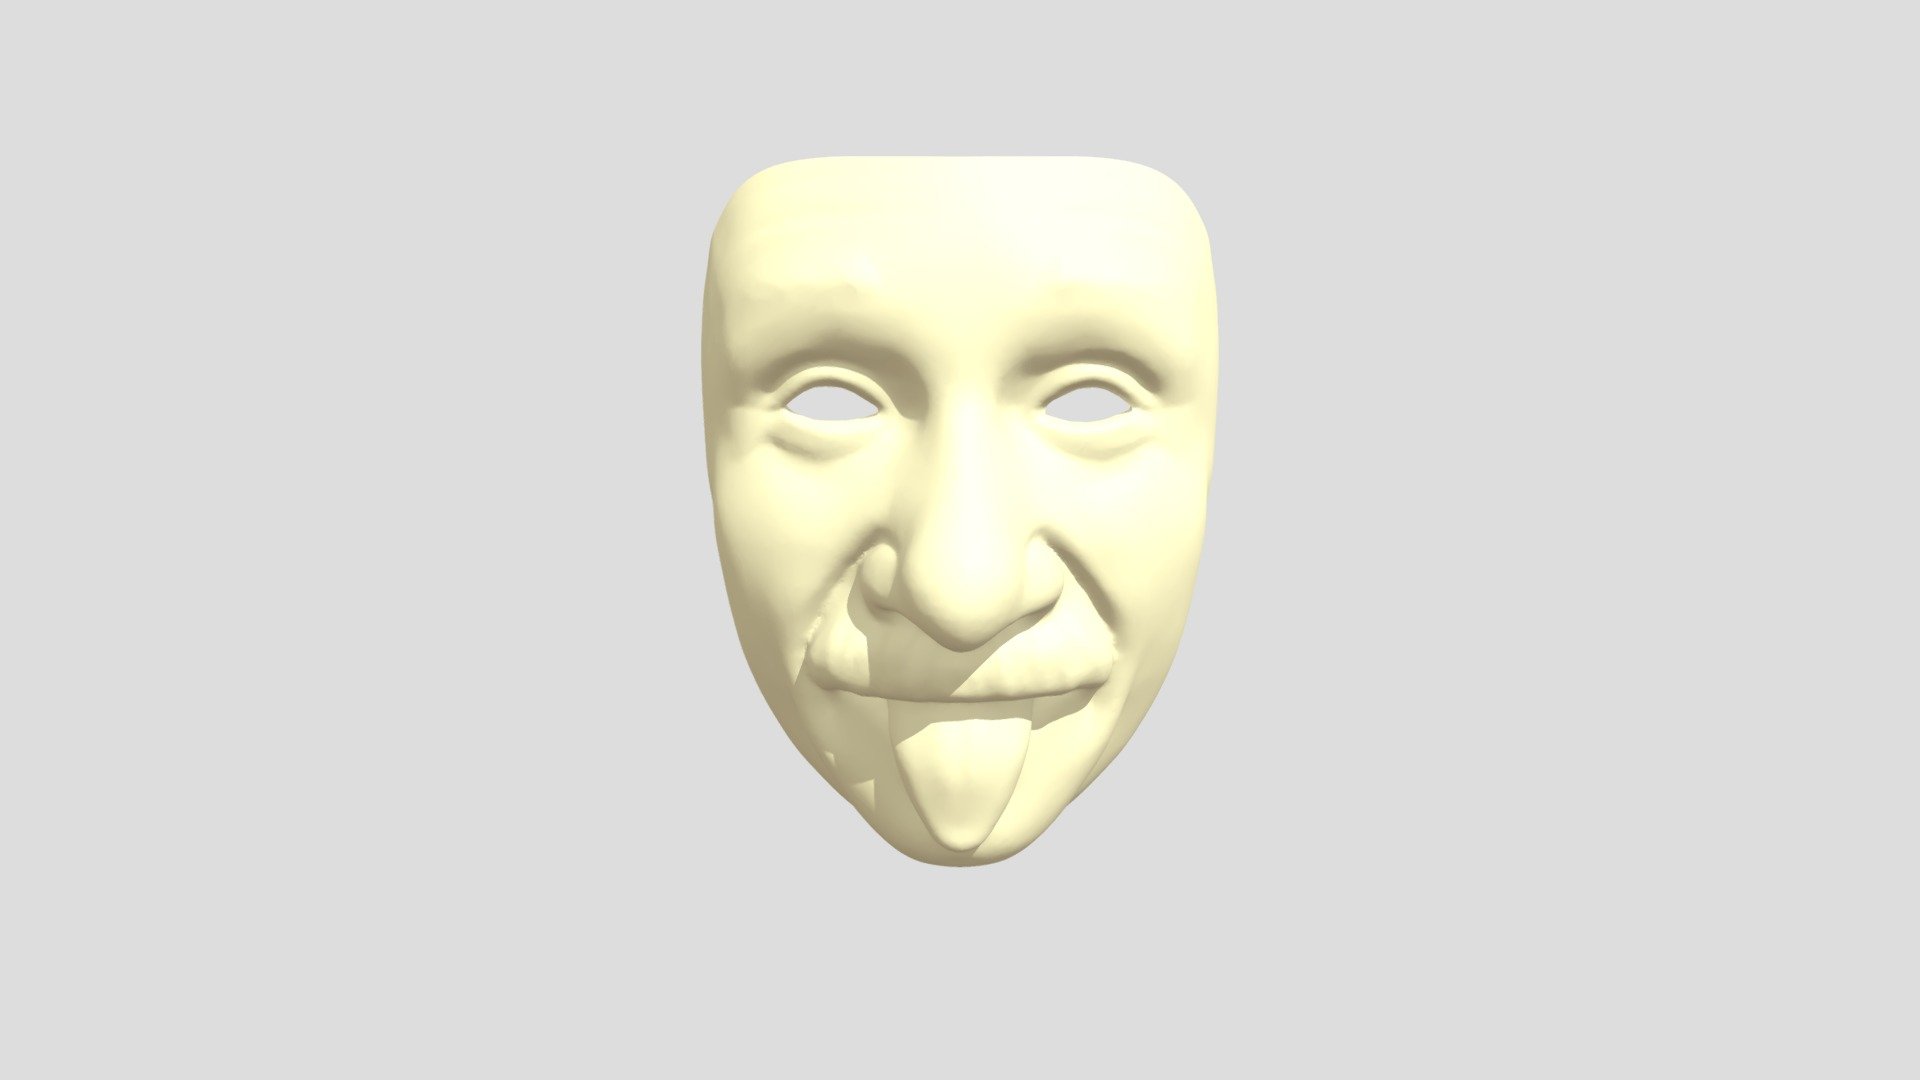 Маска Энштейна - 3D model by yourdon4ik [3c83e2c] - Sketchfab